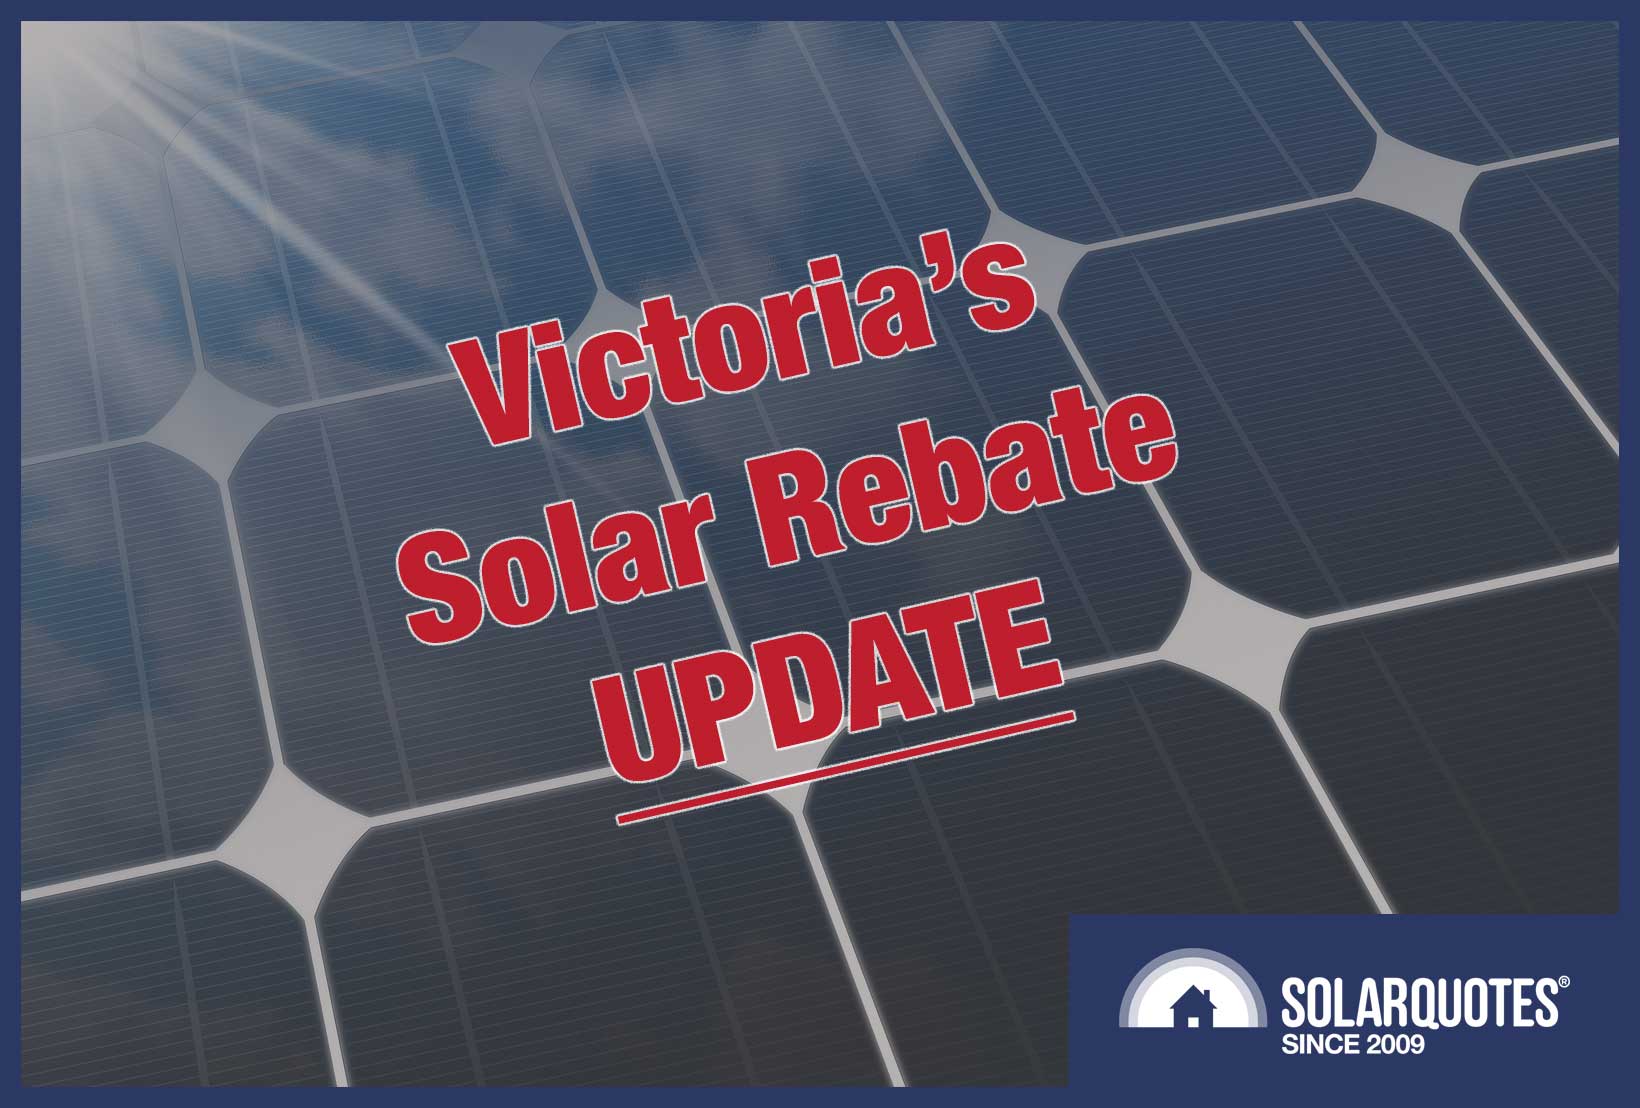 Victoria Solar Homes rebate update